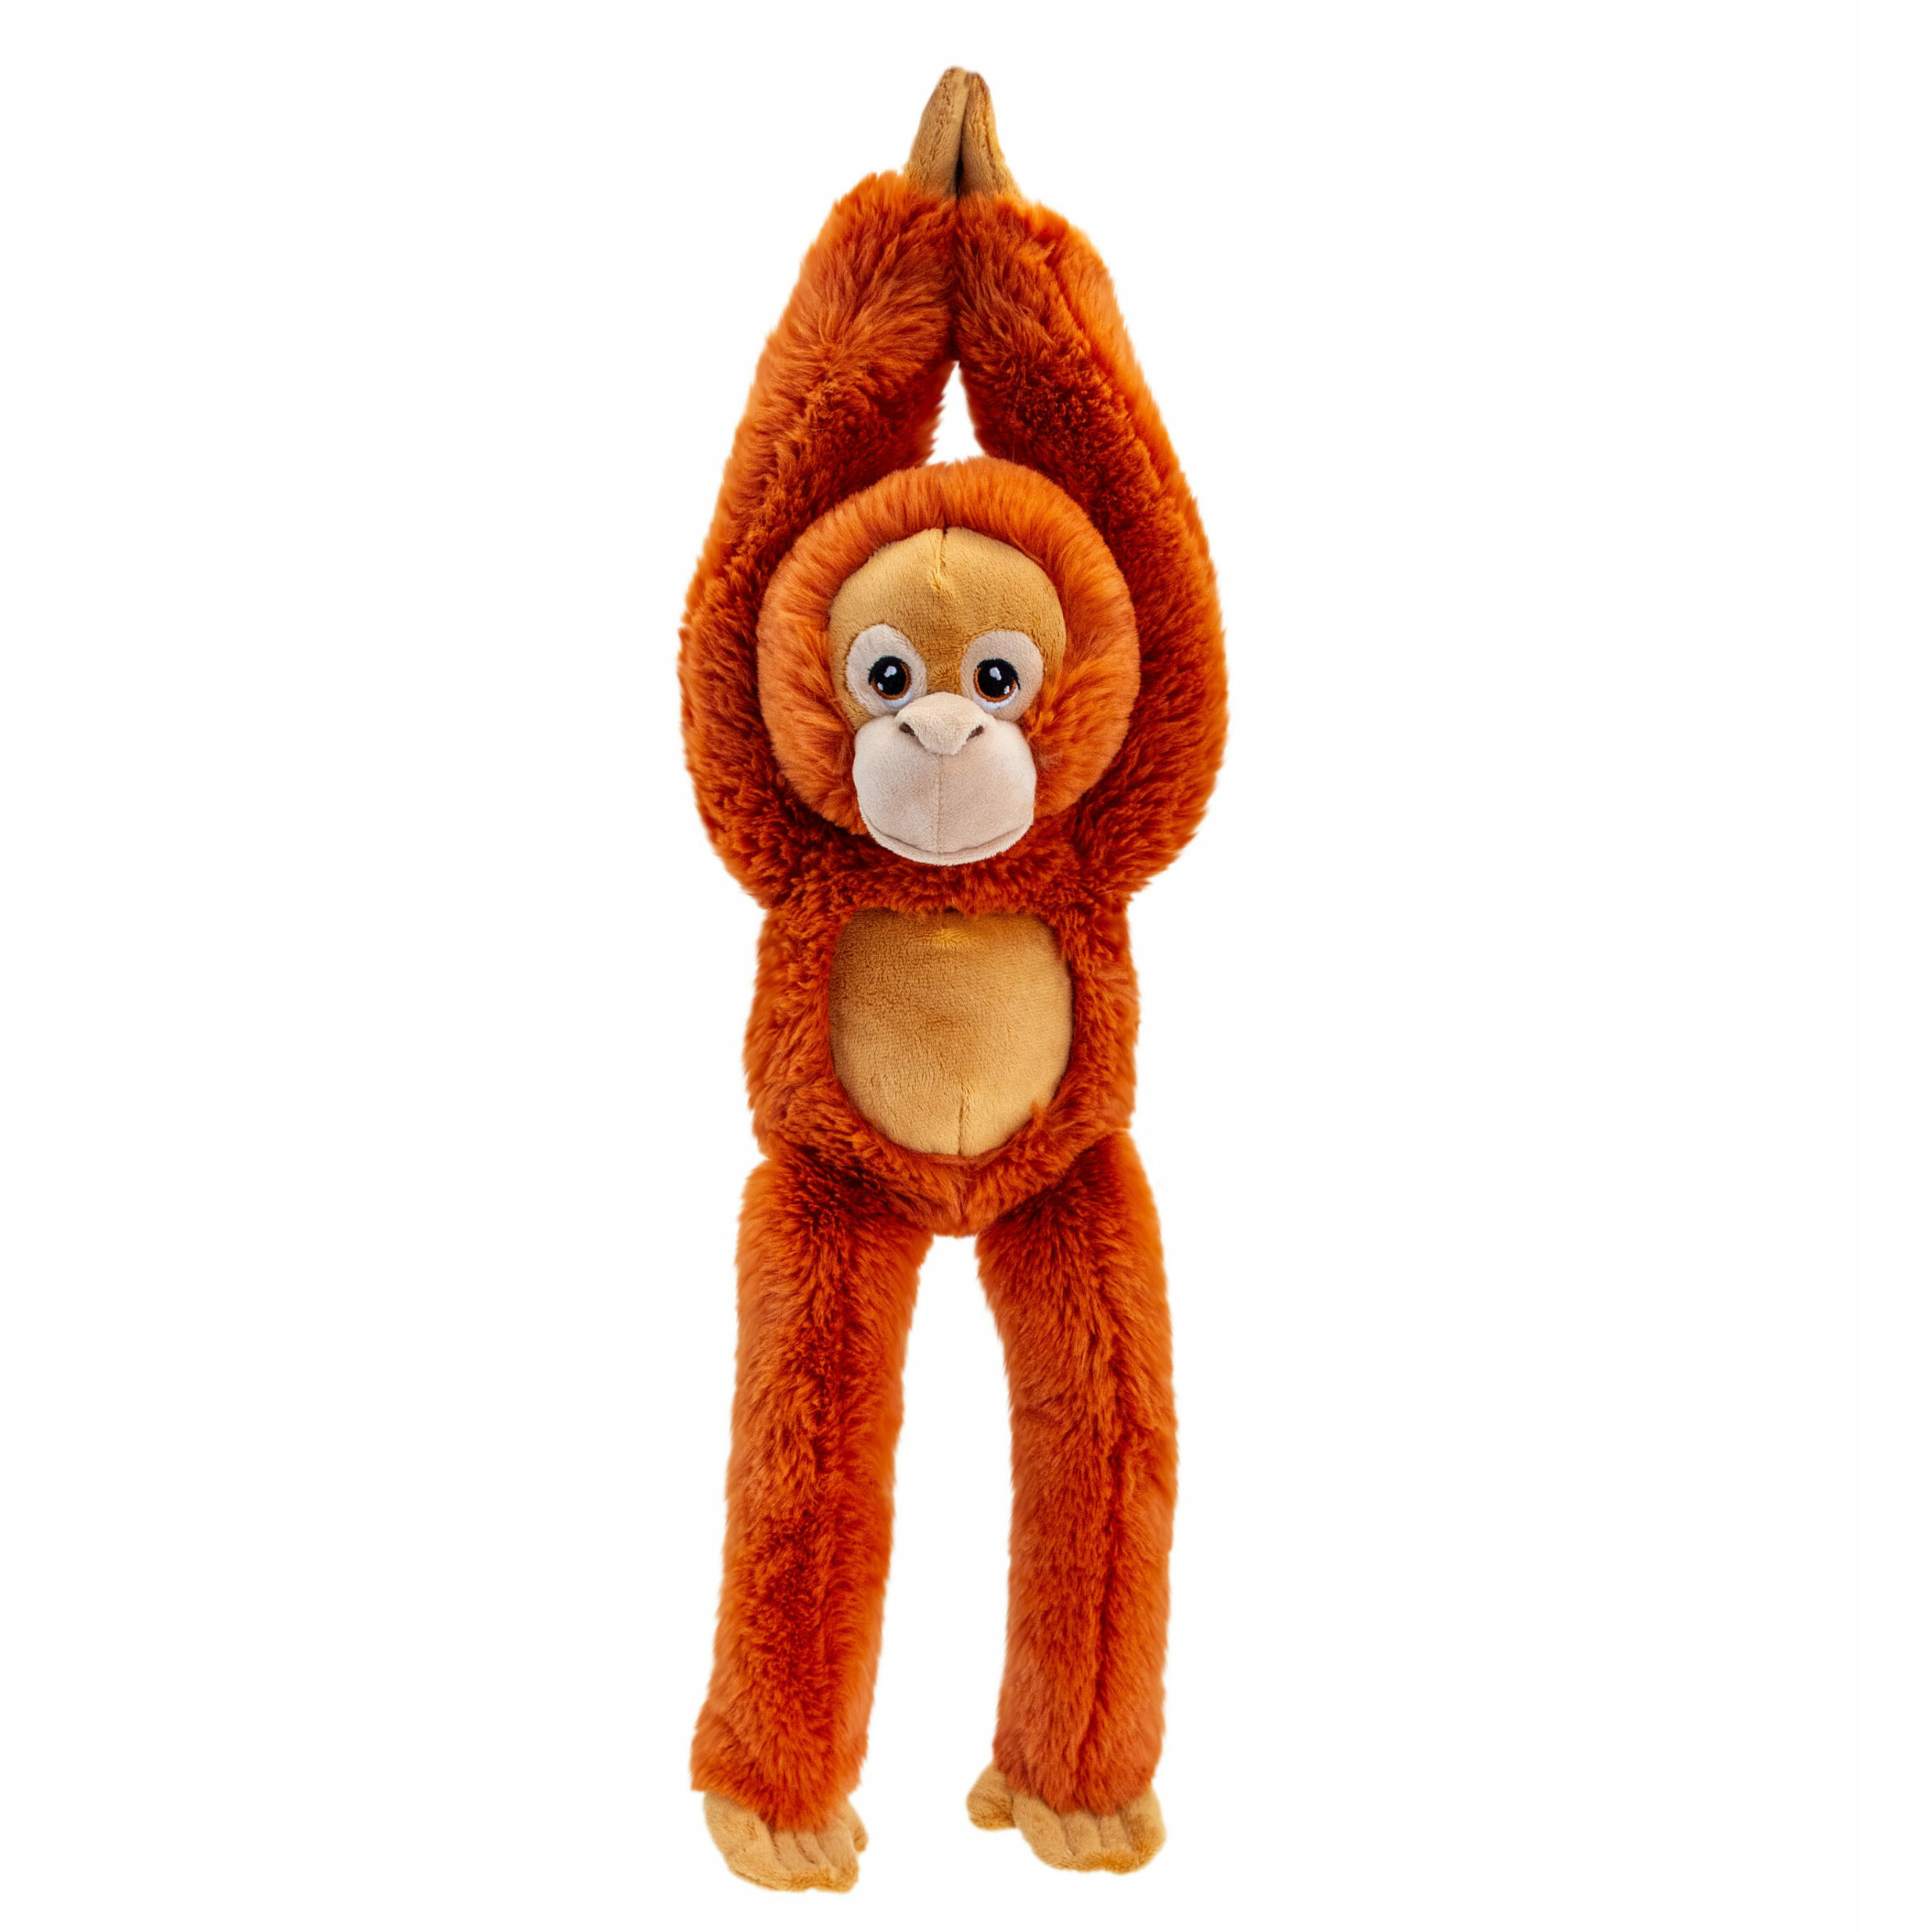 Keel Toys pluche Orang Utan aap knuffeldier rood-bruin hangend 50 cm